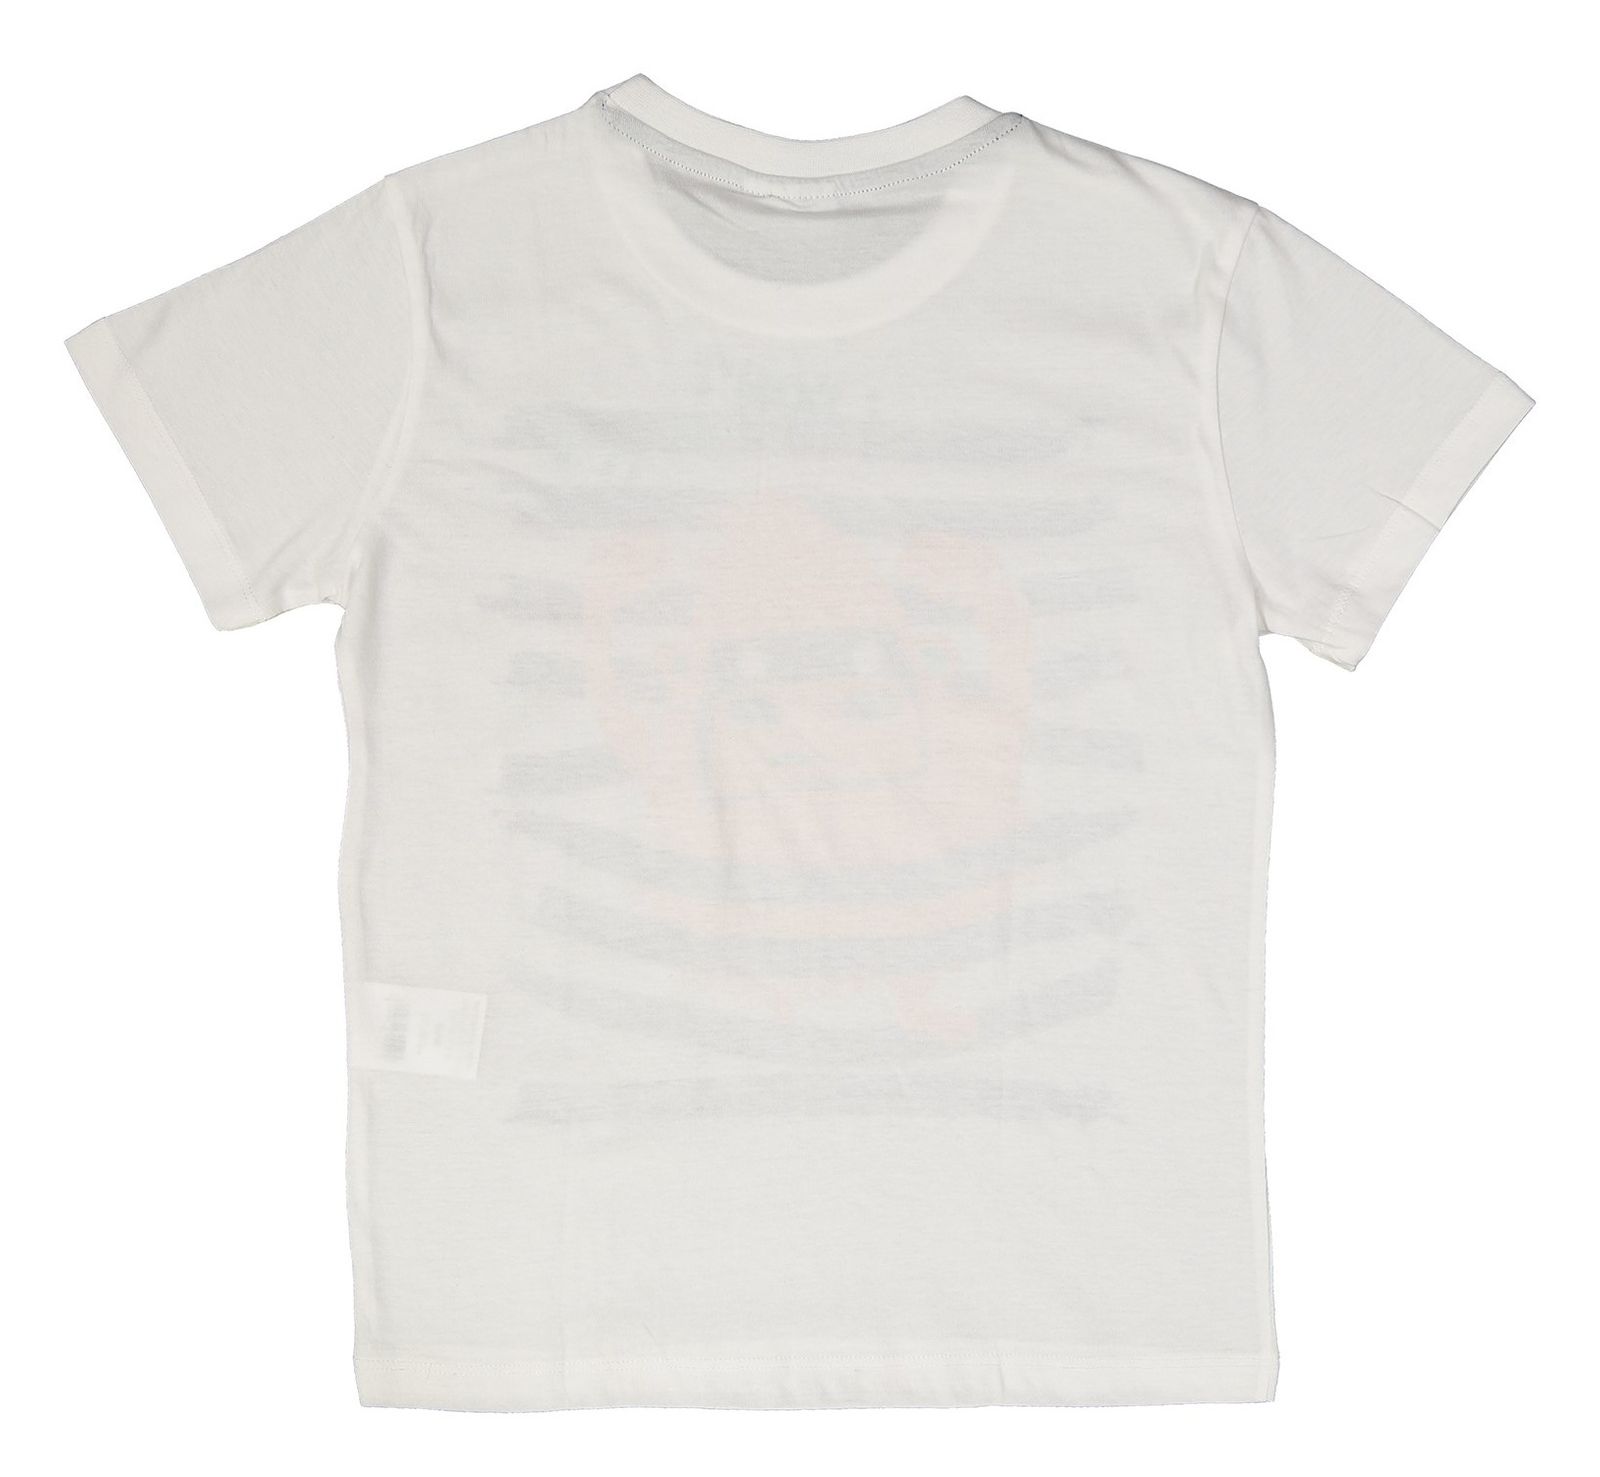 تی شرت و شلوارک نخی پسرانه - بلوکیدز - سفيد/نارنجي - 8